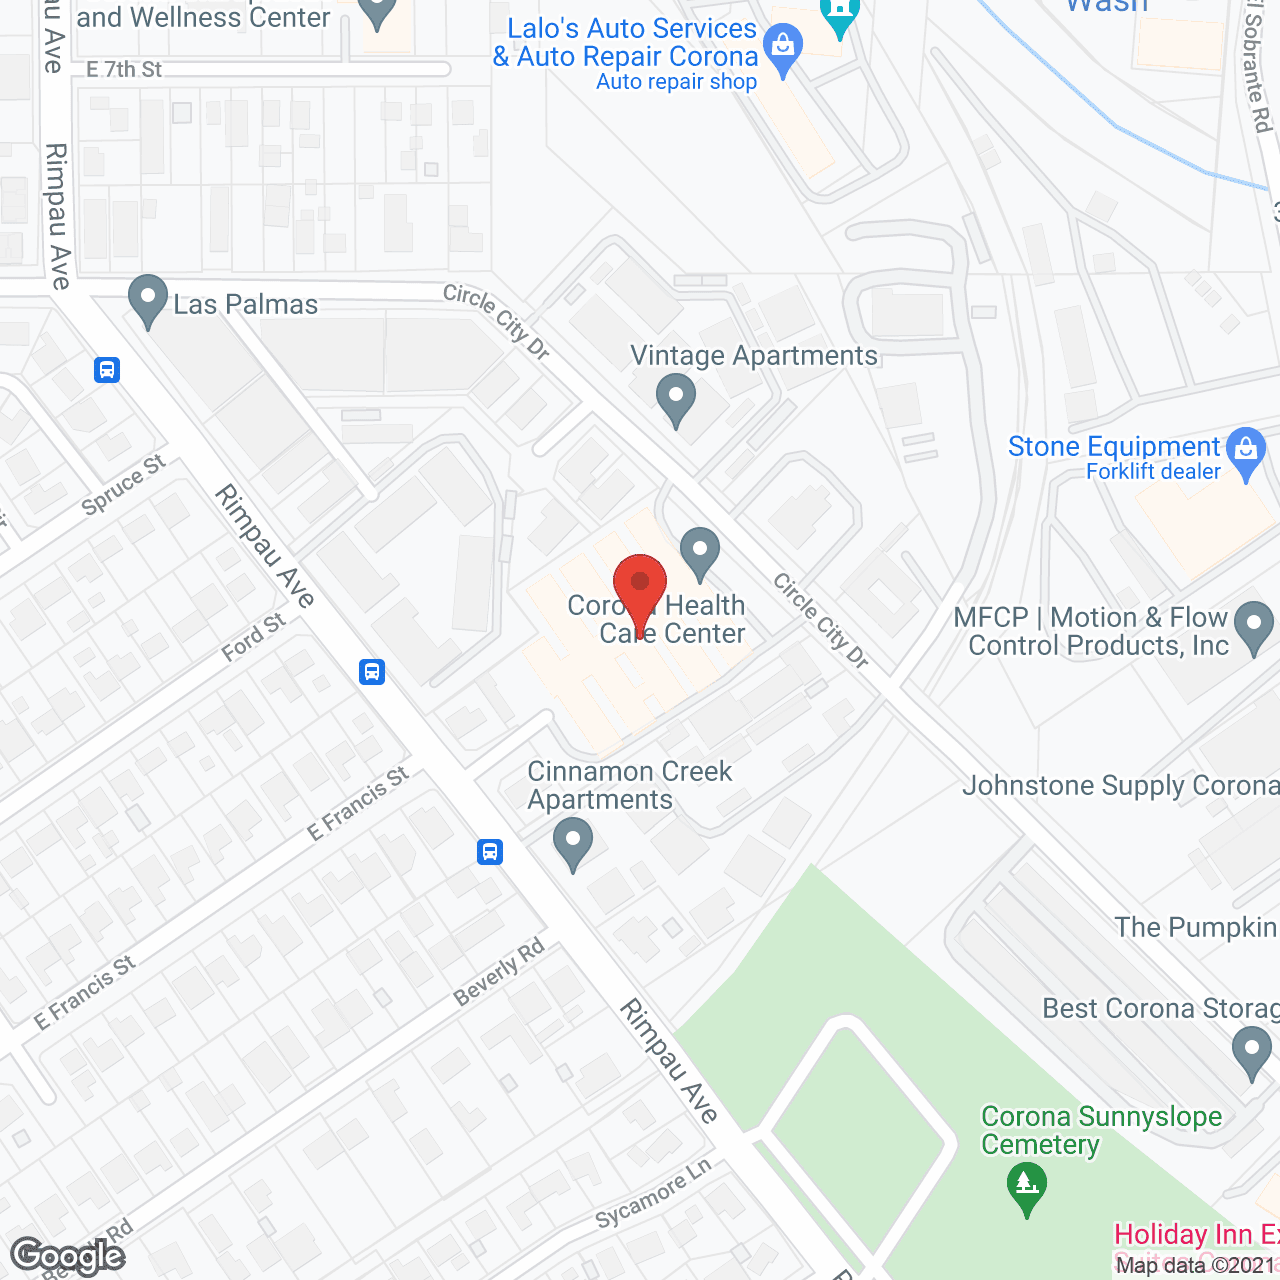 Corona Health Care Center in google map